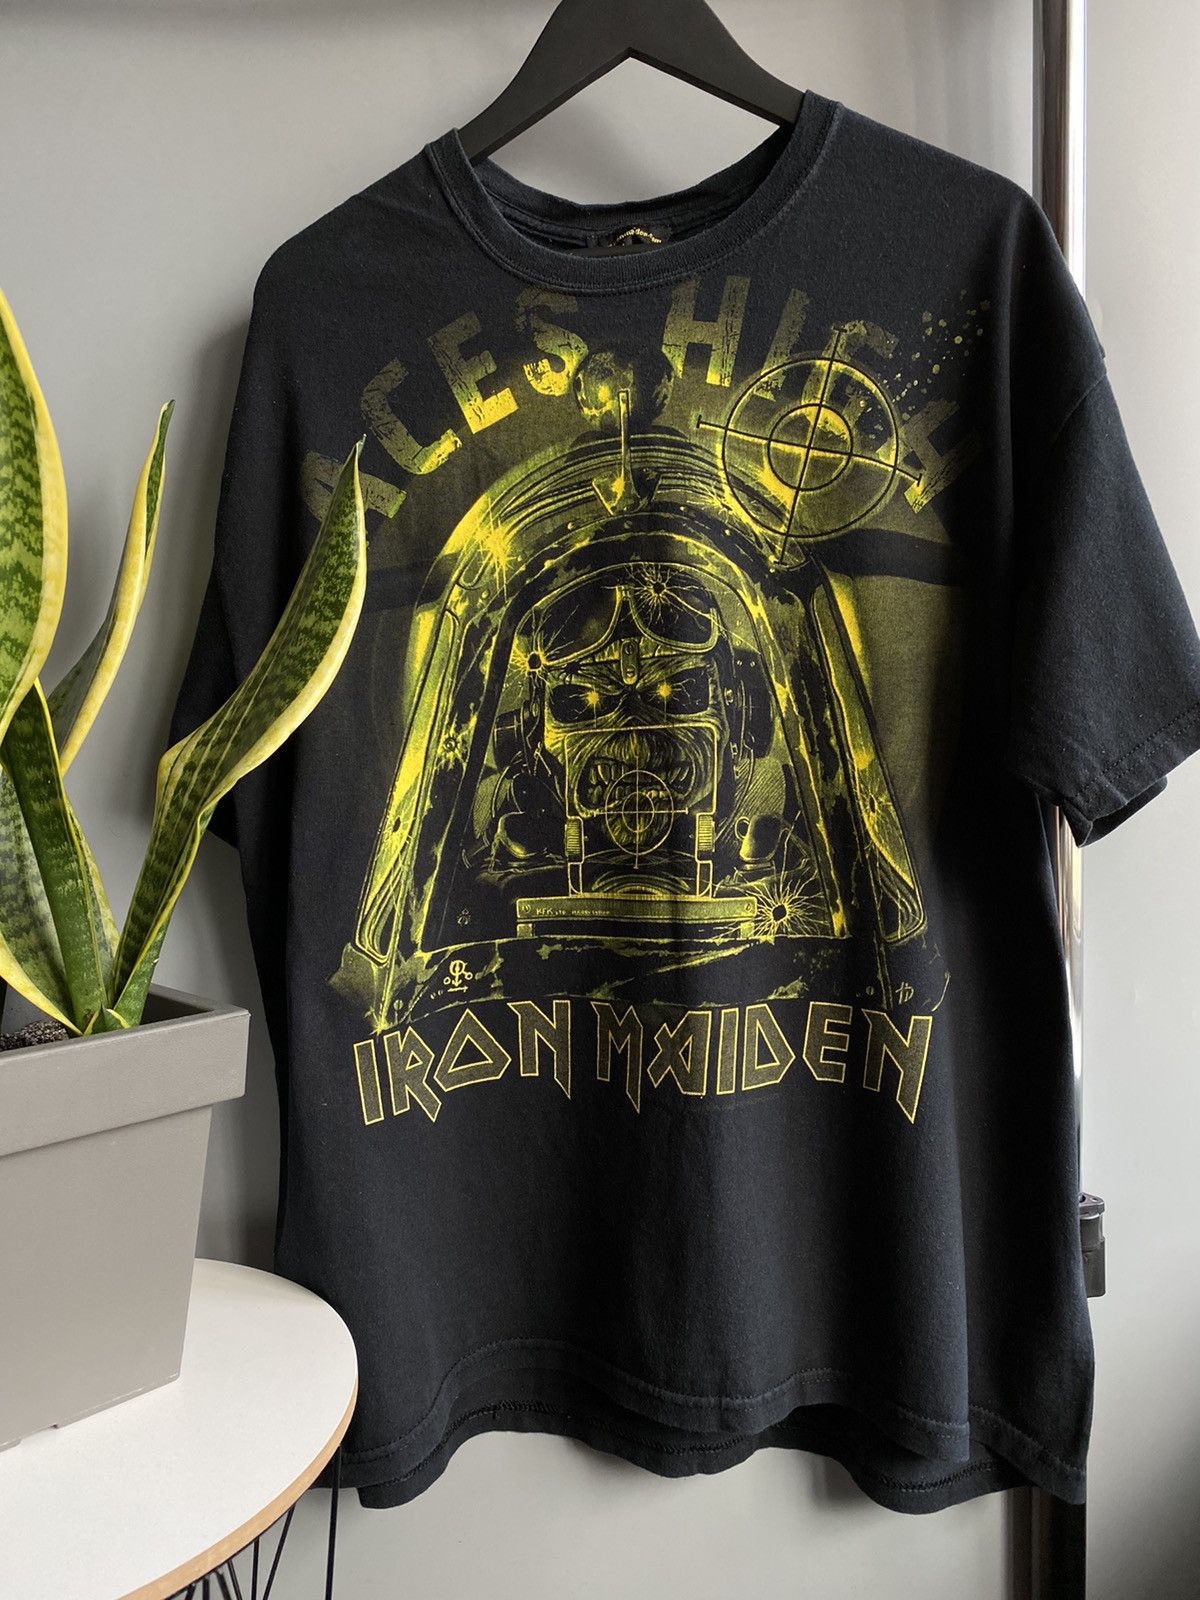 Vintage Vintage Iron Maiden “Aces High “ 2010 Band T Shirt Size US XL / EU 56 / 4 - 2 Preview